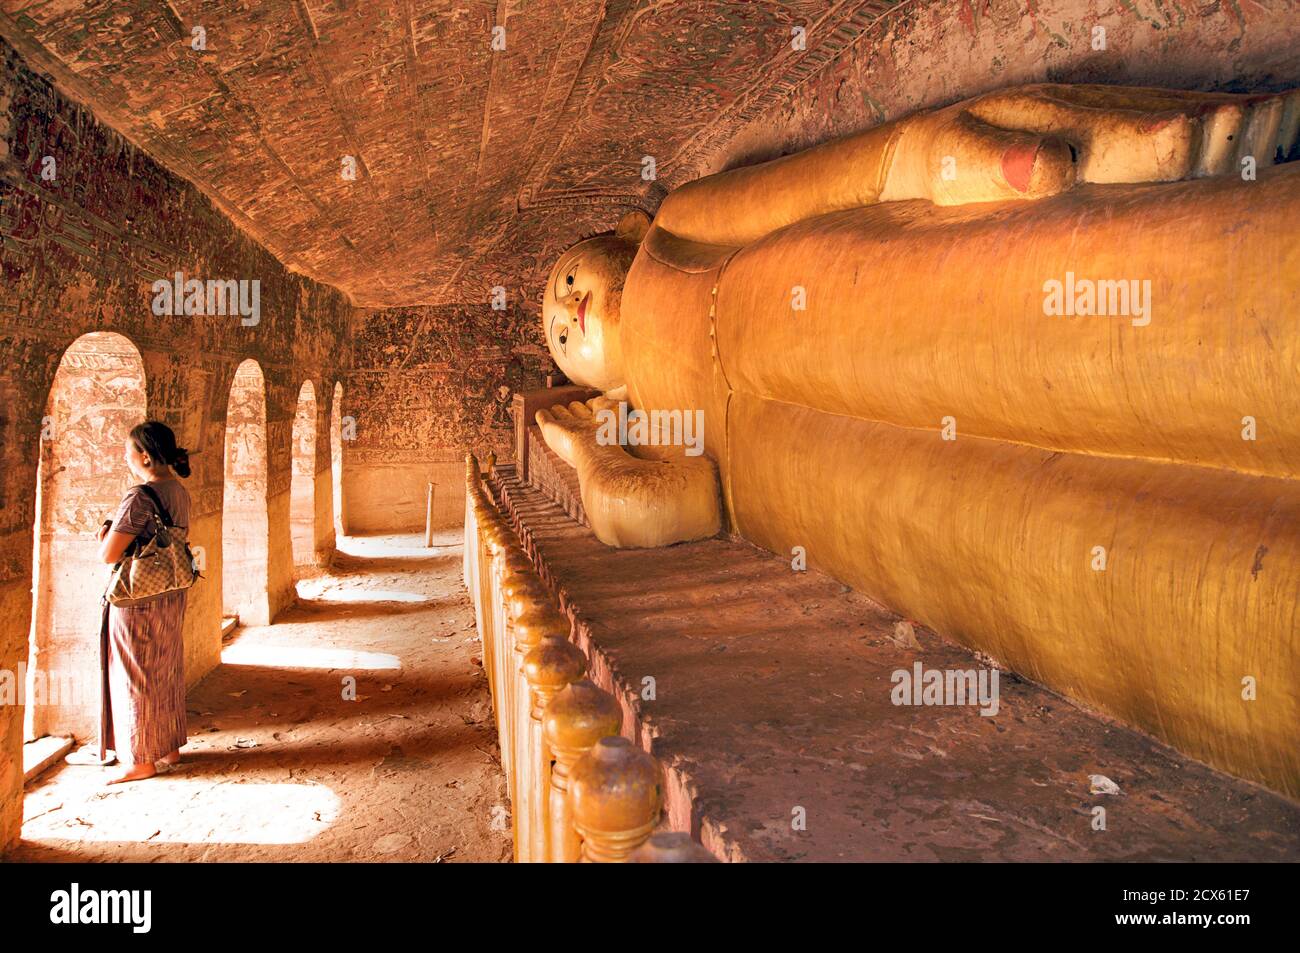 Reclining buddha, Hpo Win Daung caves, near Monywa, Sagaing region, Burma. MODEL RELEASED Stock Photo